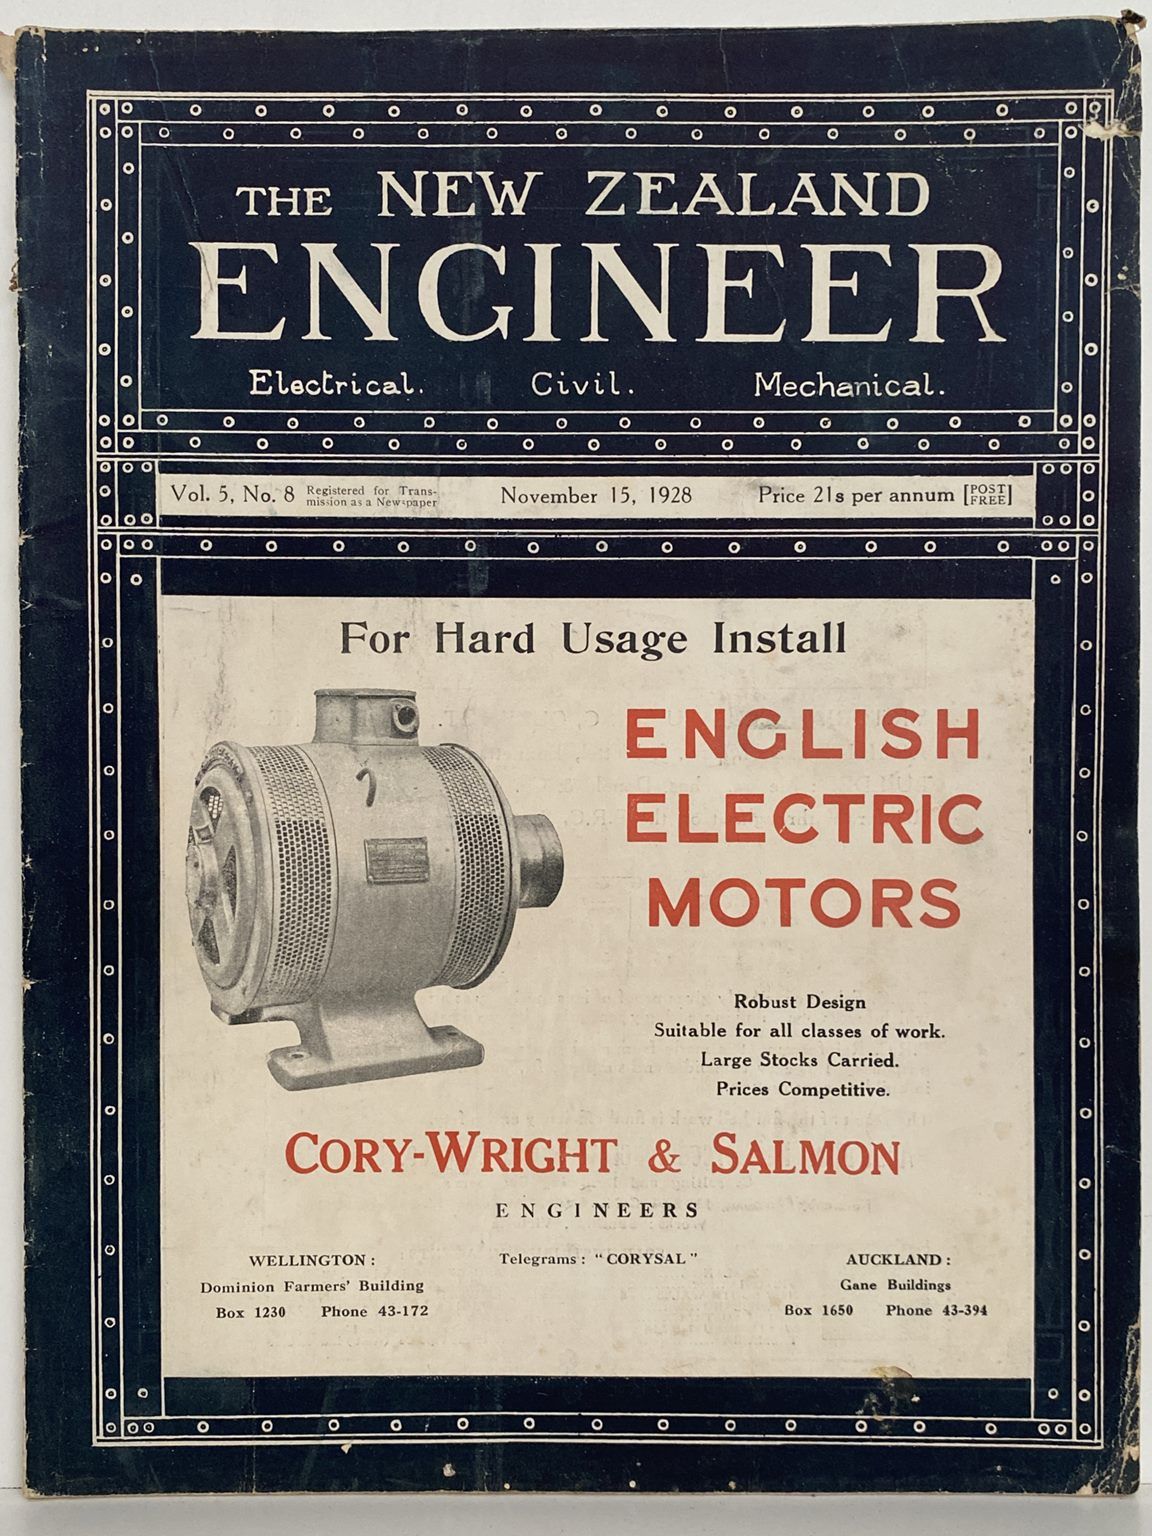 OLD MAGAZINE: The New Zealand Engineer Vol. 5, No. 8 - 15 November 1928